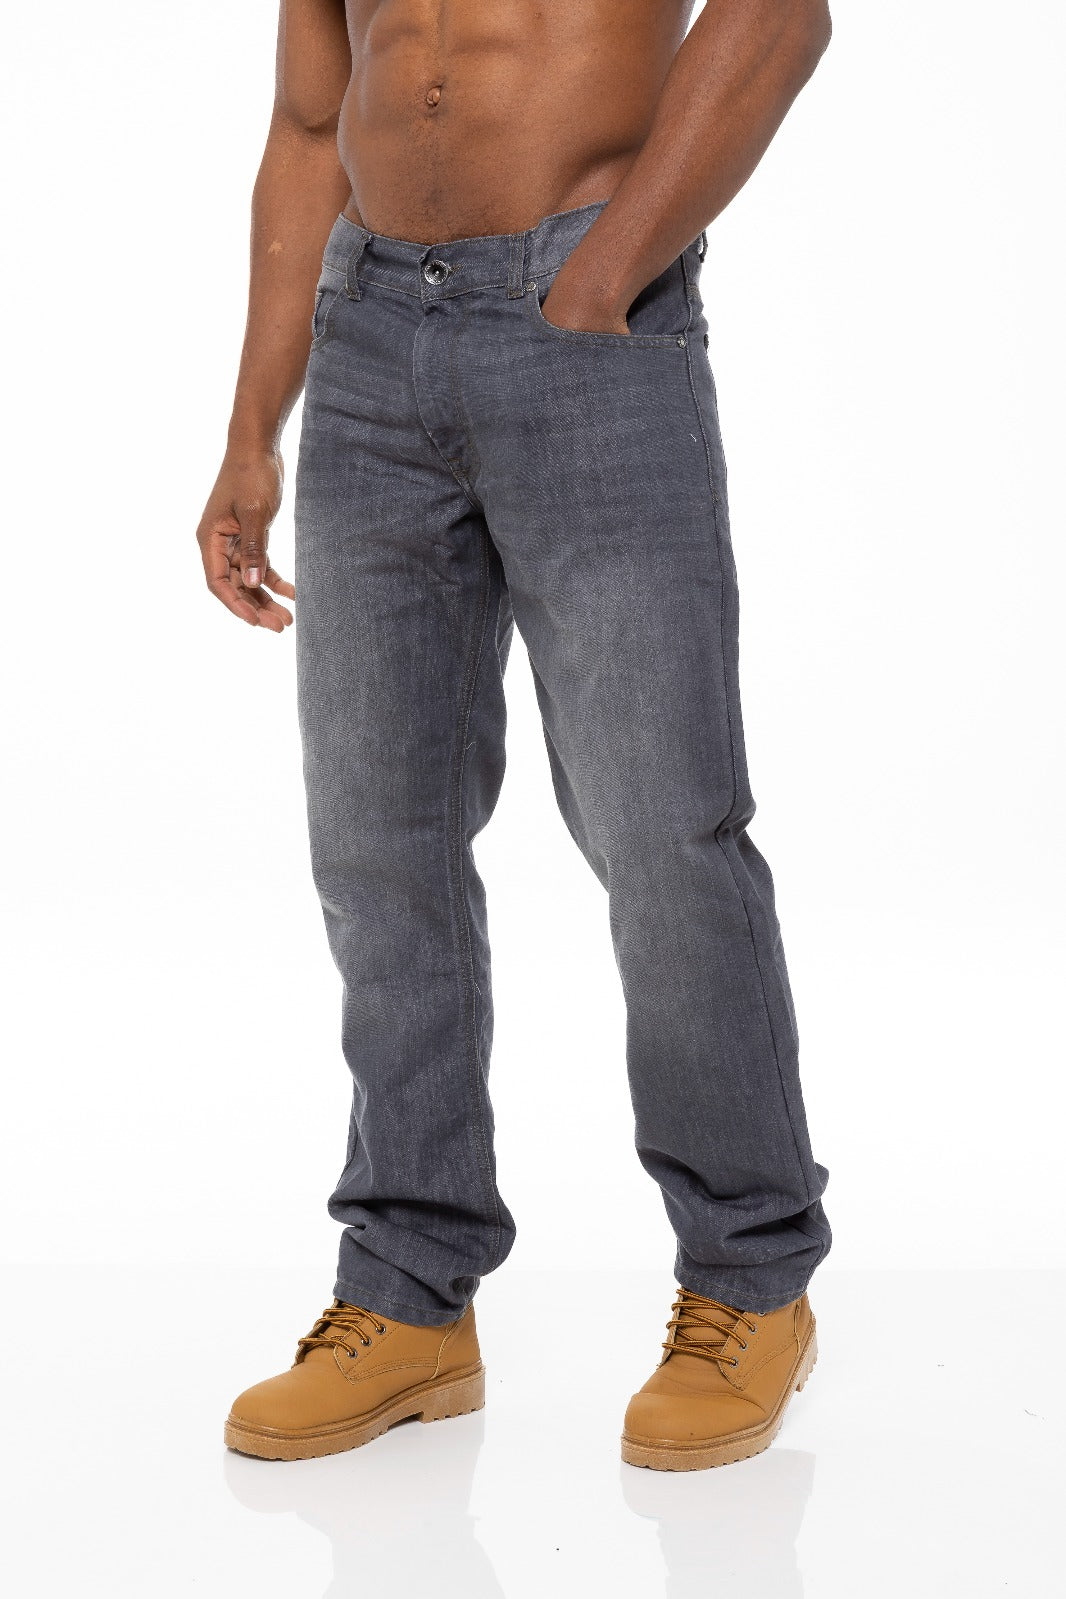 Kruze Mens Cuffed Jeans Regular Fit Jogger Denim Pants Trousers All Waist  Sizes